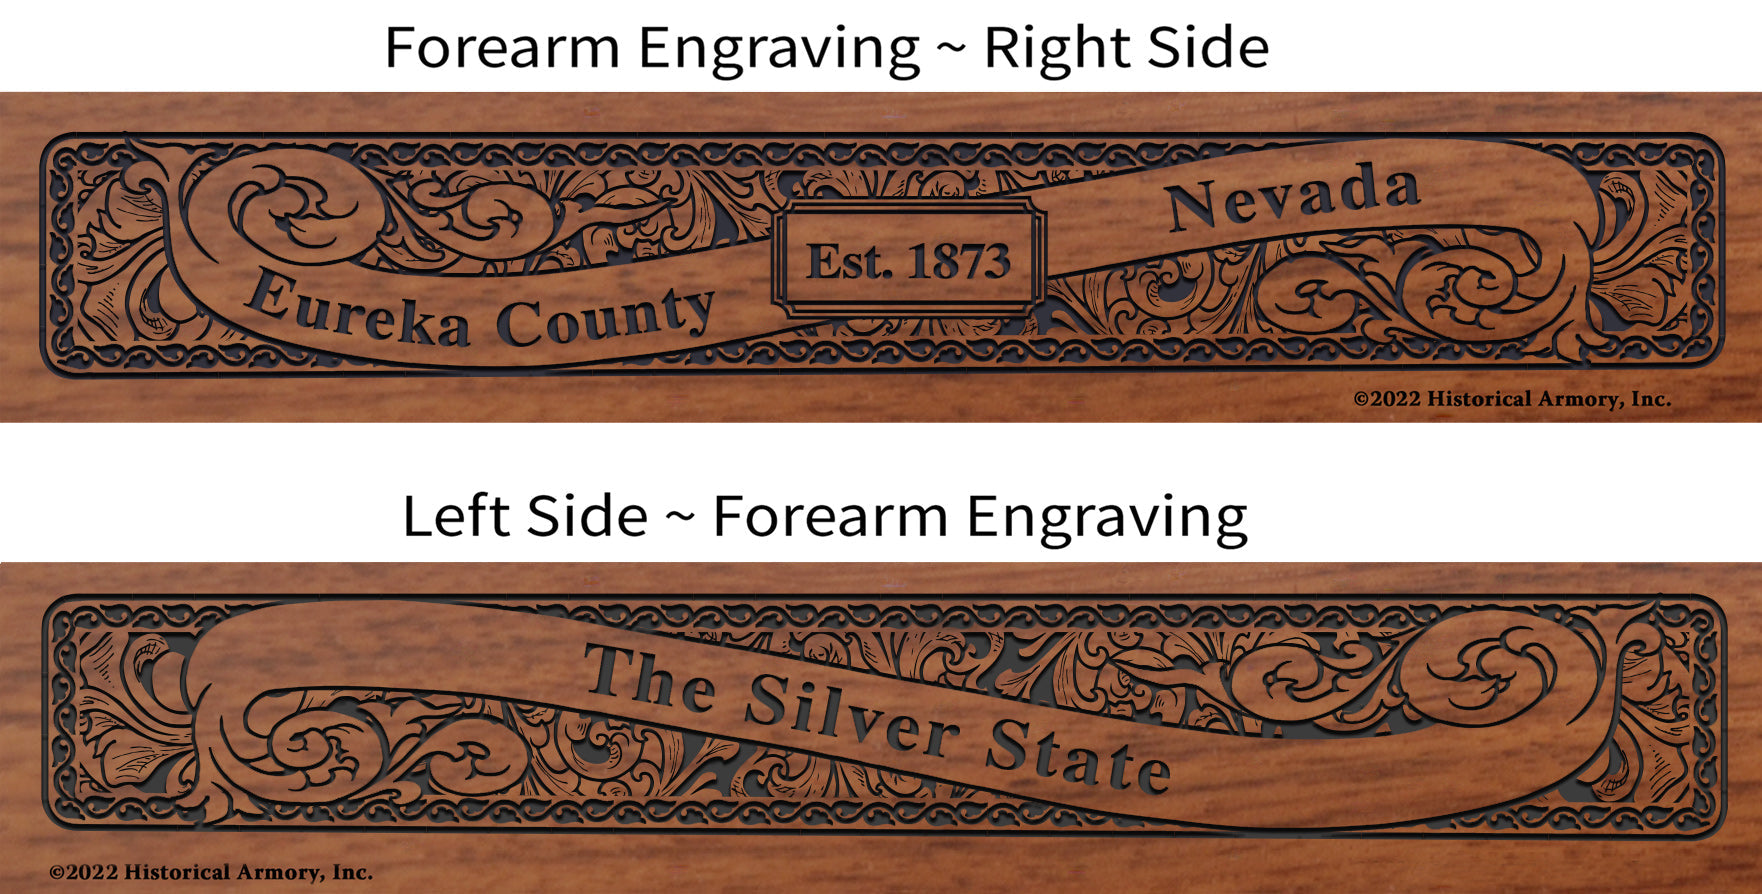 Eureka County Nevada Engraved Rifle Forearm